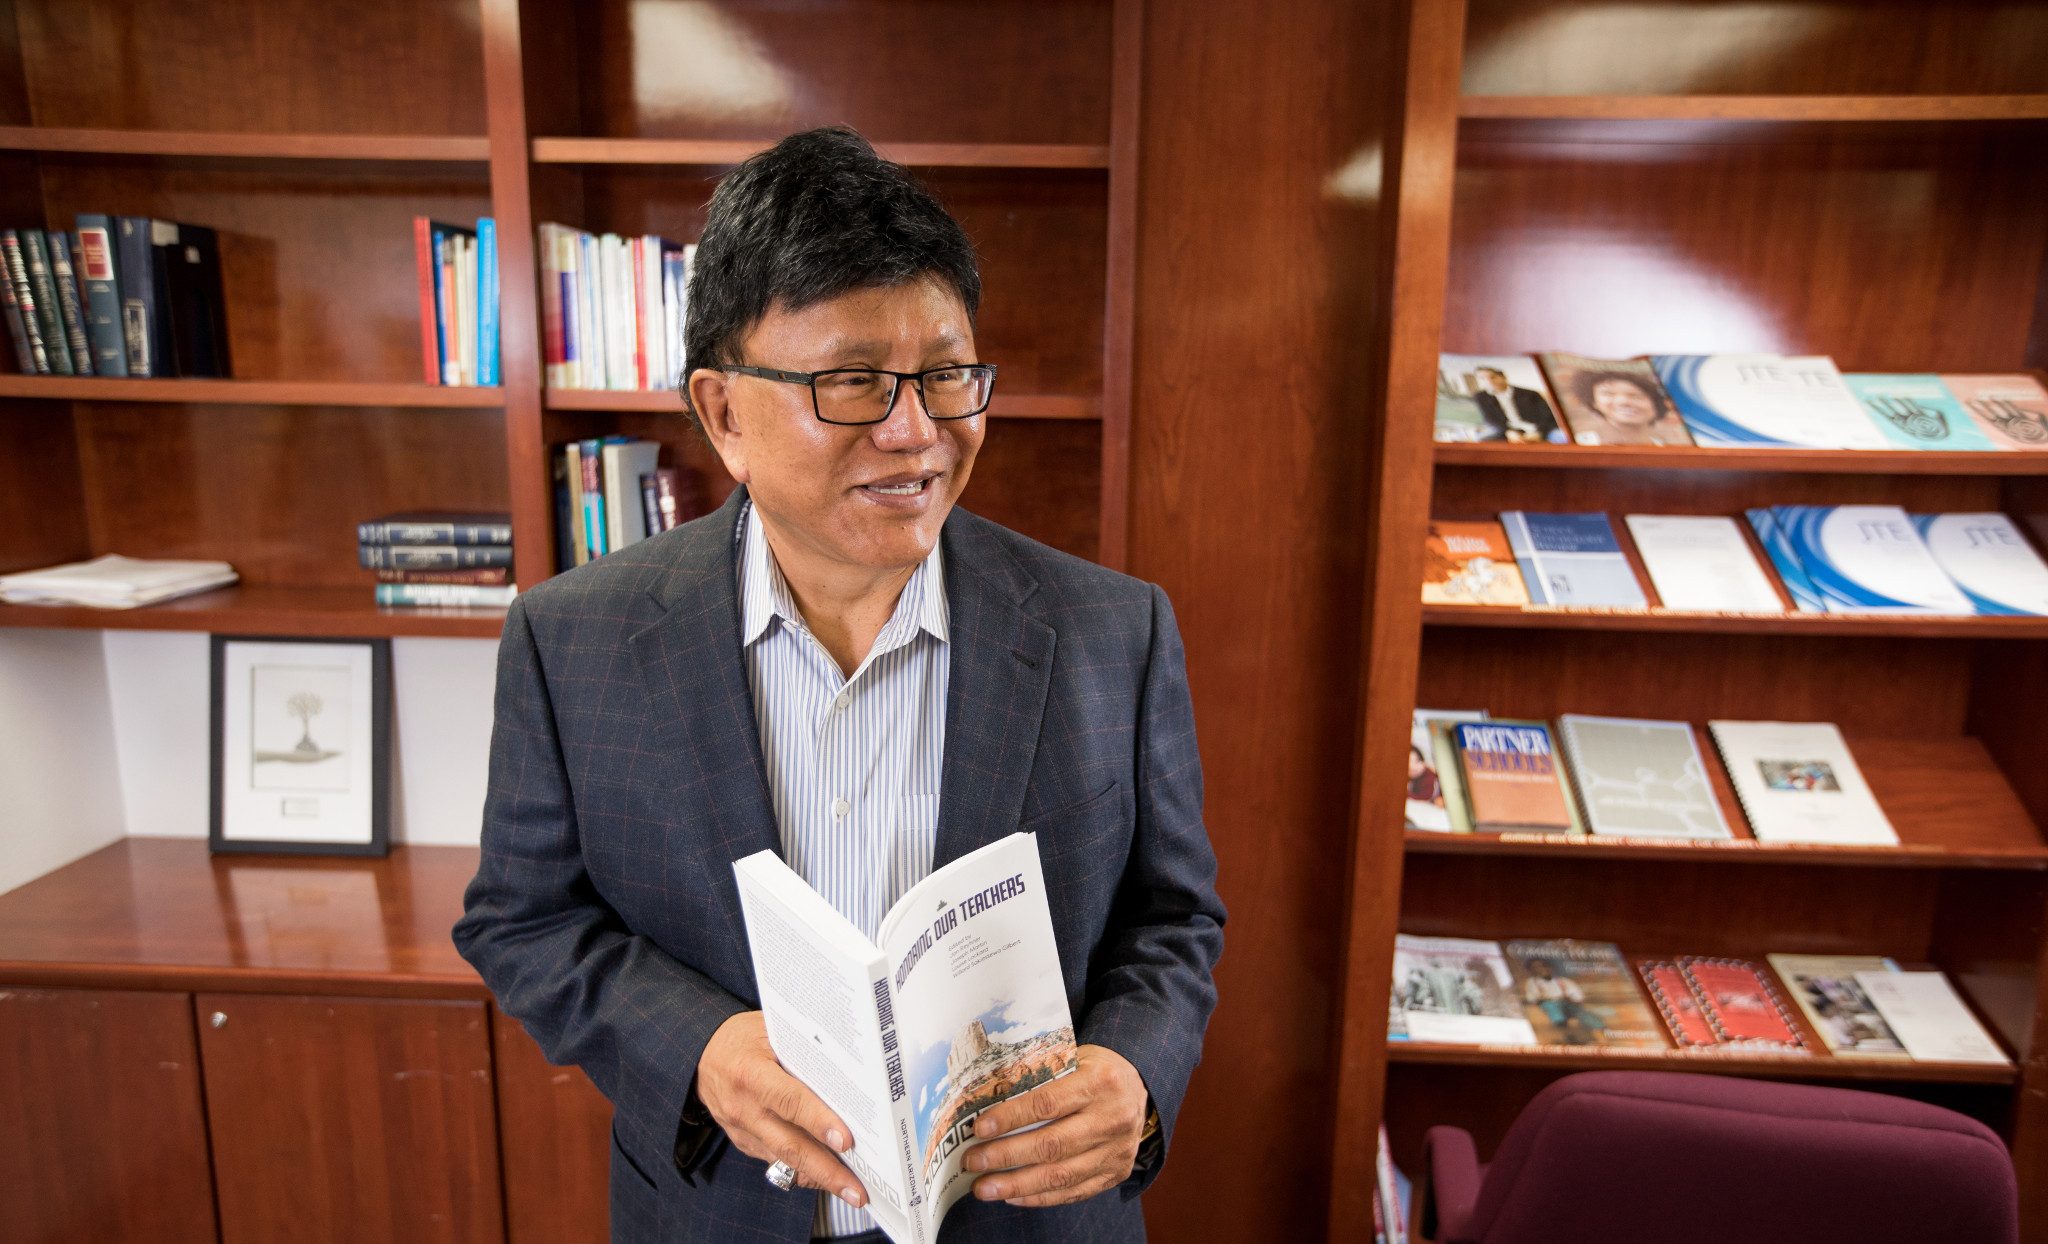 Professor Joseph Martin standing in a room, holding a book.